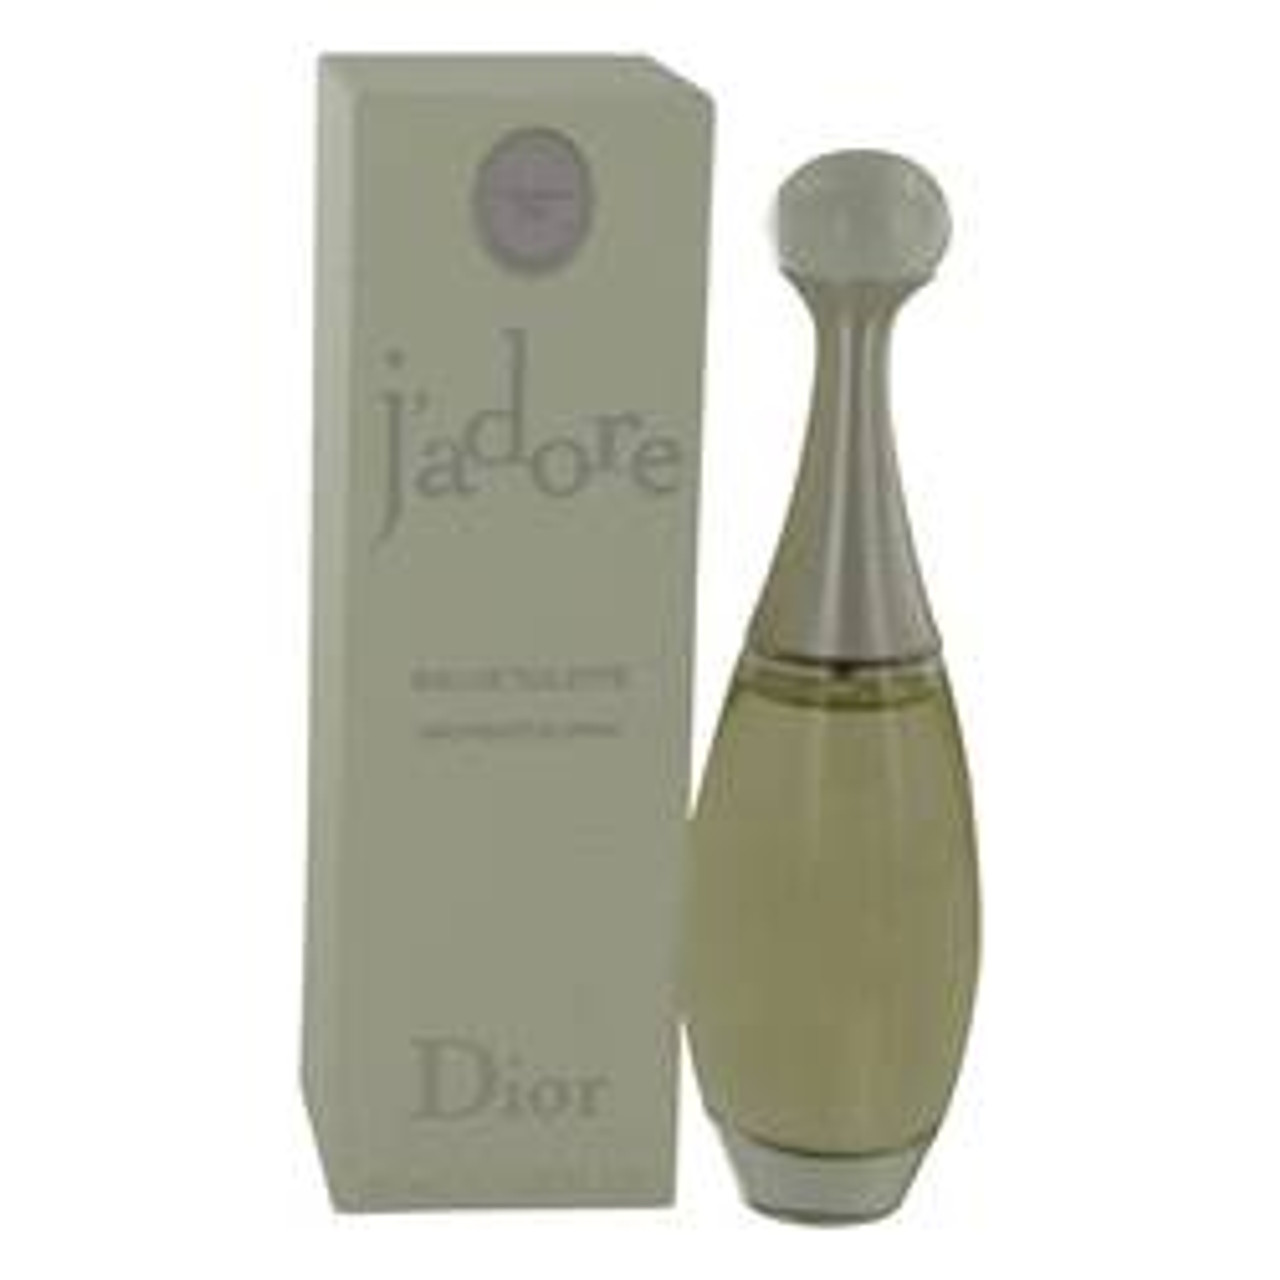 Jadore Perfume By Christian Dior Eau De Toilette Spray 1.7 oz for Women - *Pre-Order